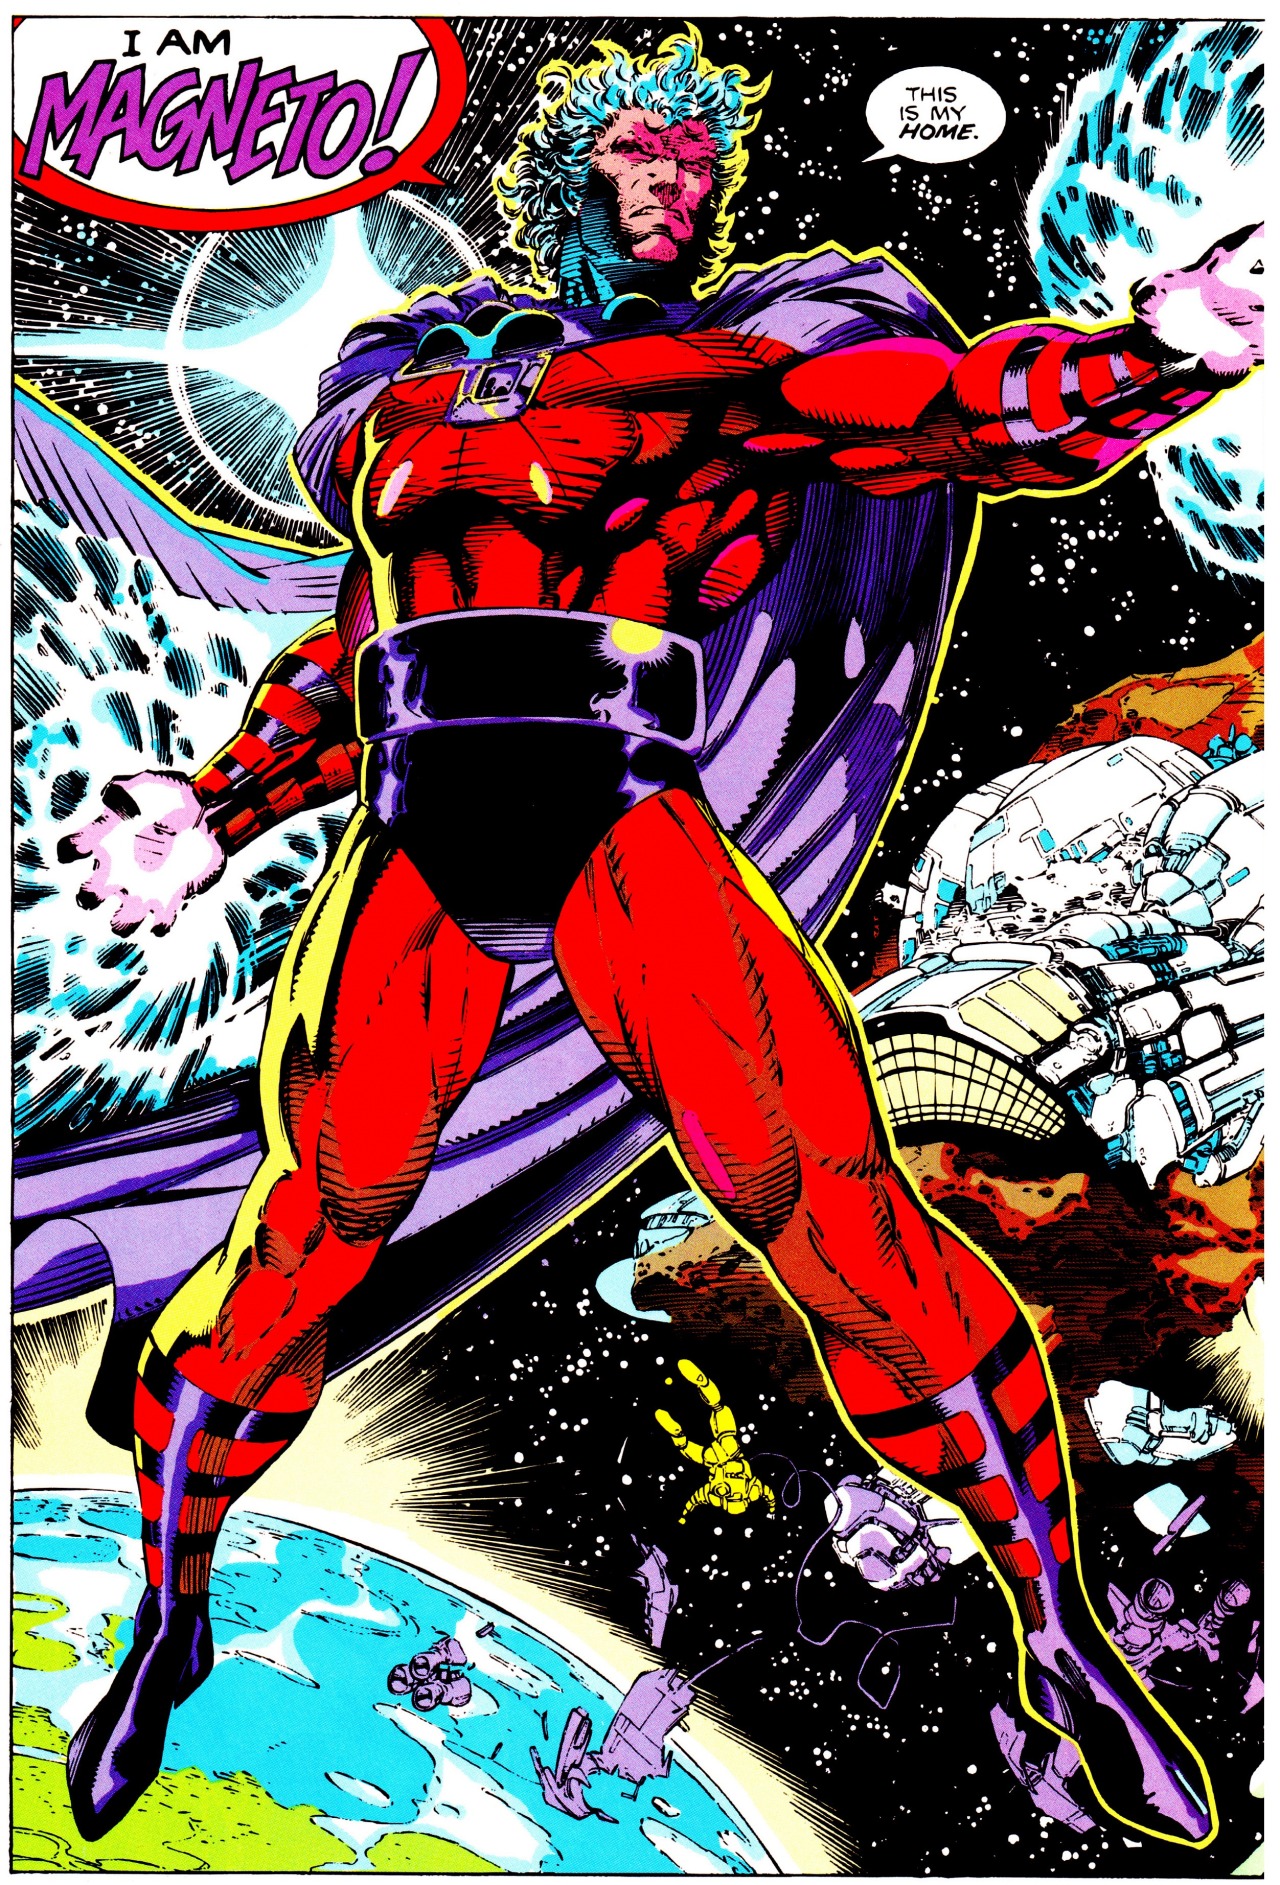 jthenr-comics-vault:  Magneto at Asteroid MX-MEN Vol.2 #1 (Oct. 1991)Art by Jim Lee